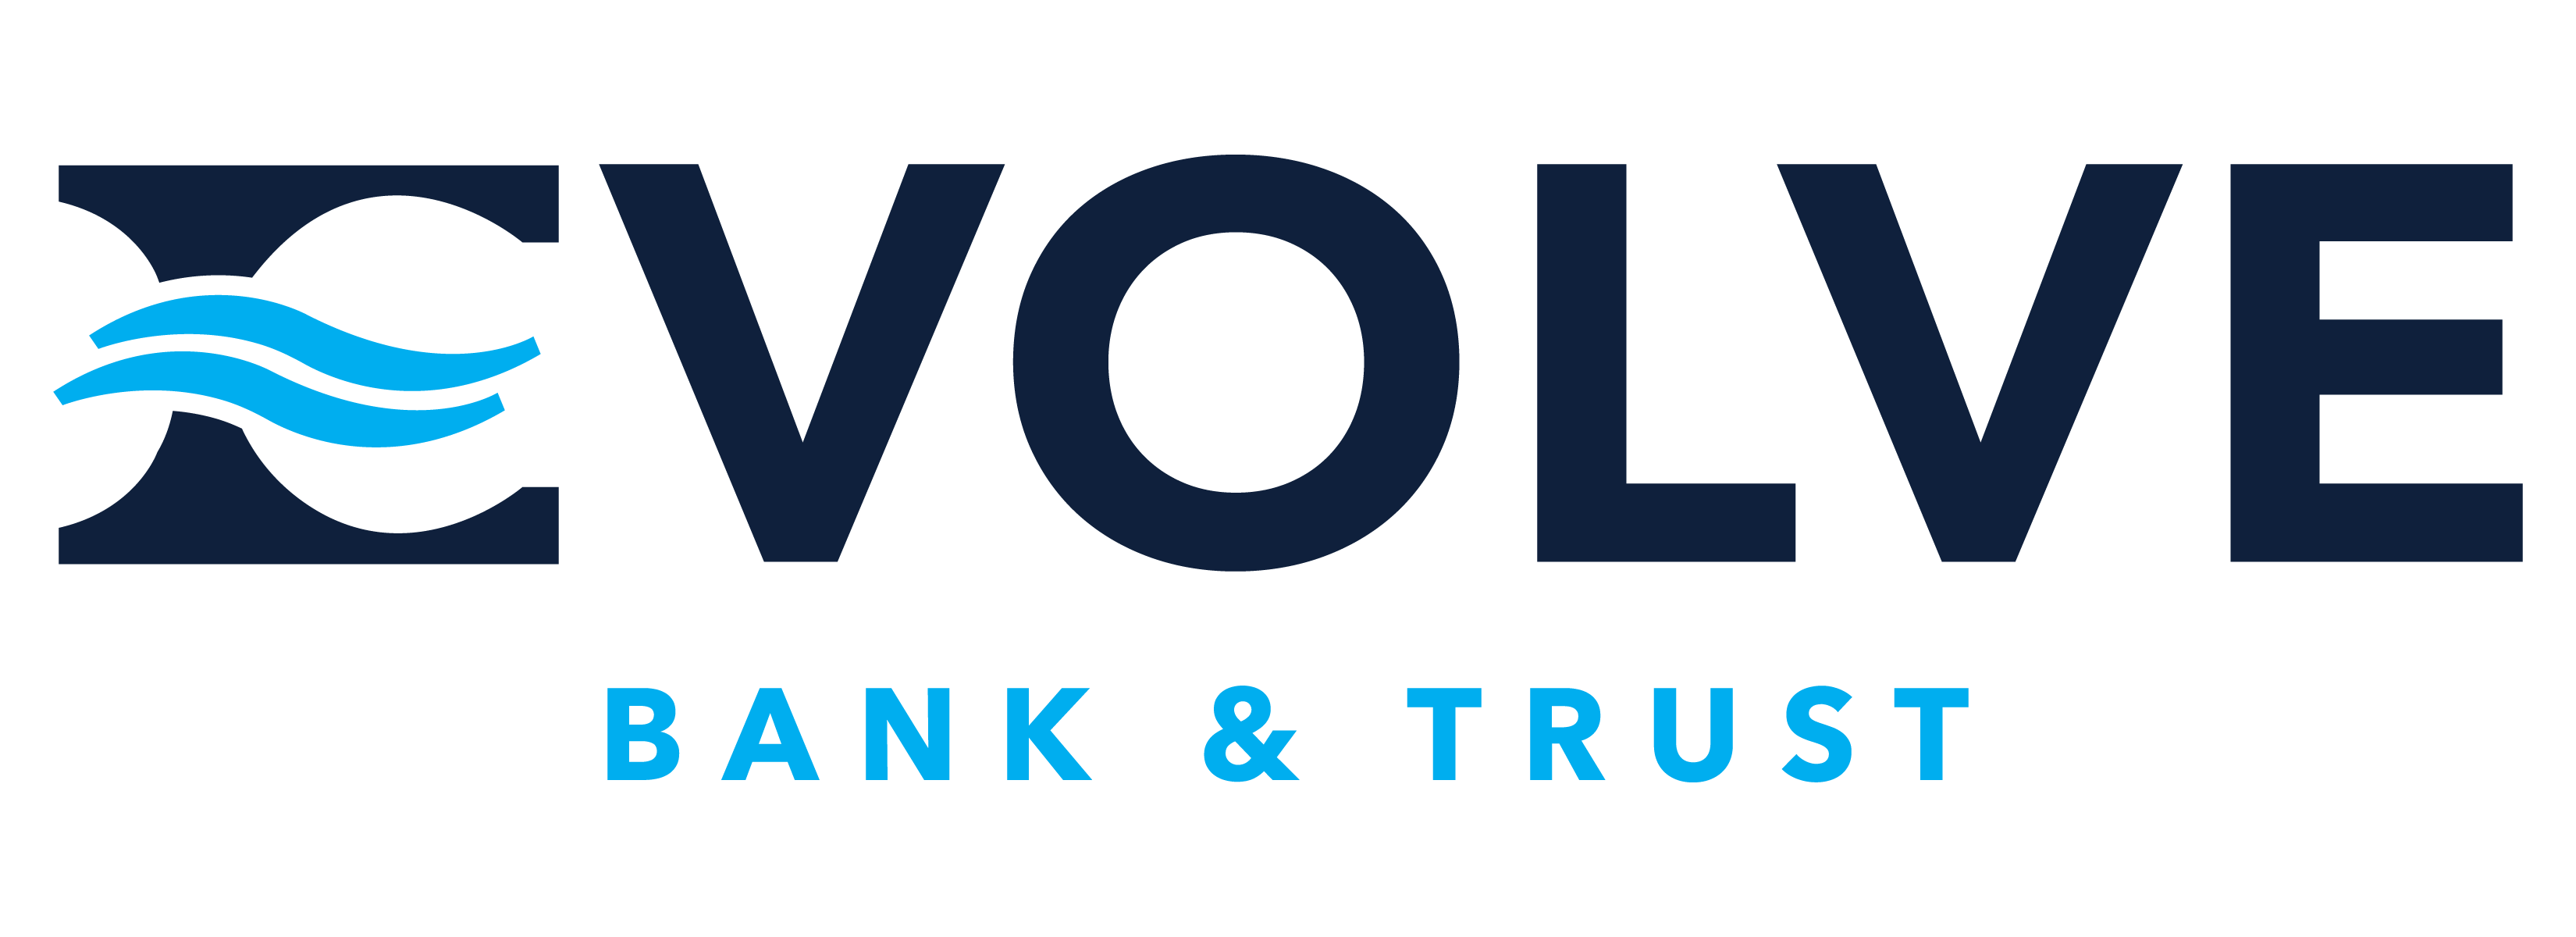 Evolve Bank & Trust logo